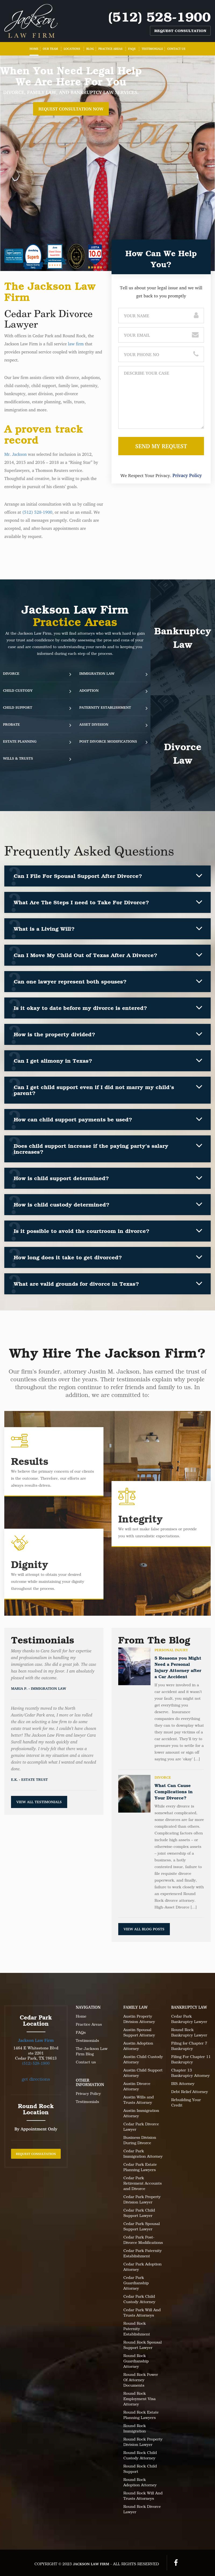 Jackson Law Firm - Cedar Park TX Lawyers